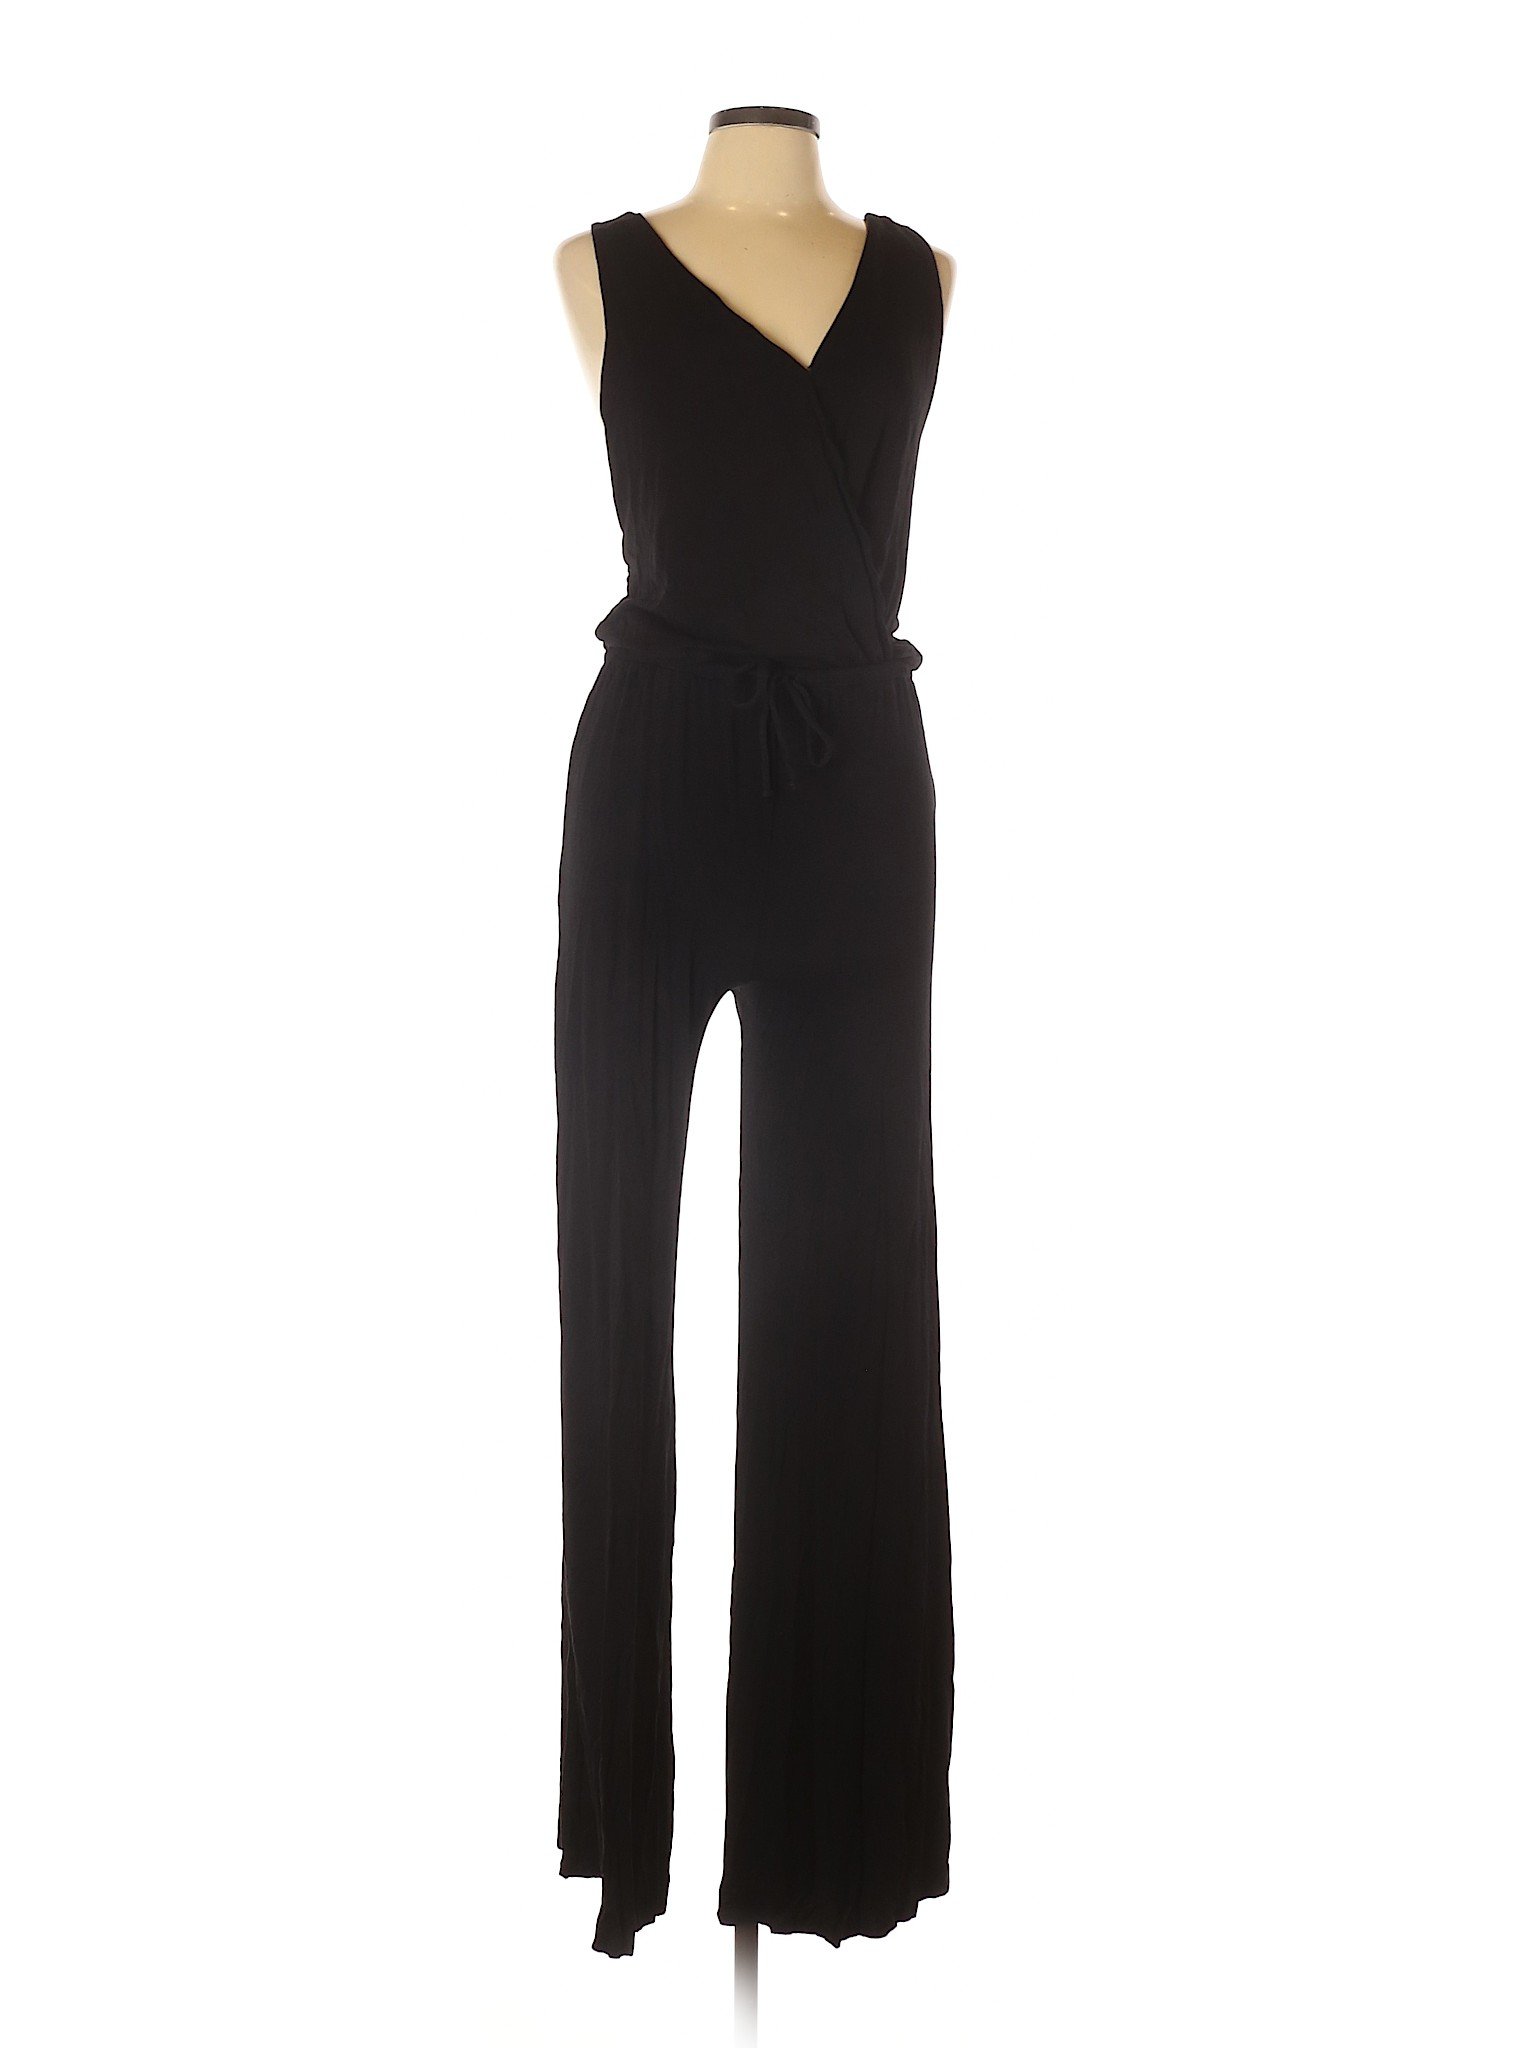 Young Fabulous & Broke Solid Black Jumpsuit Size L - 87% off | thredUP